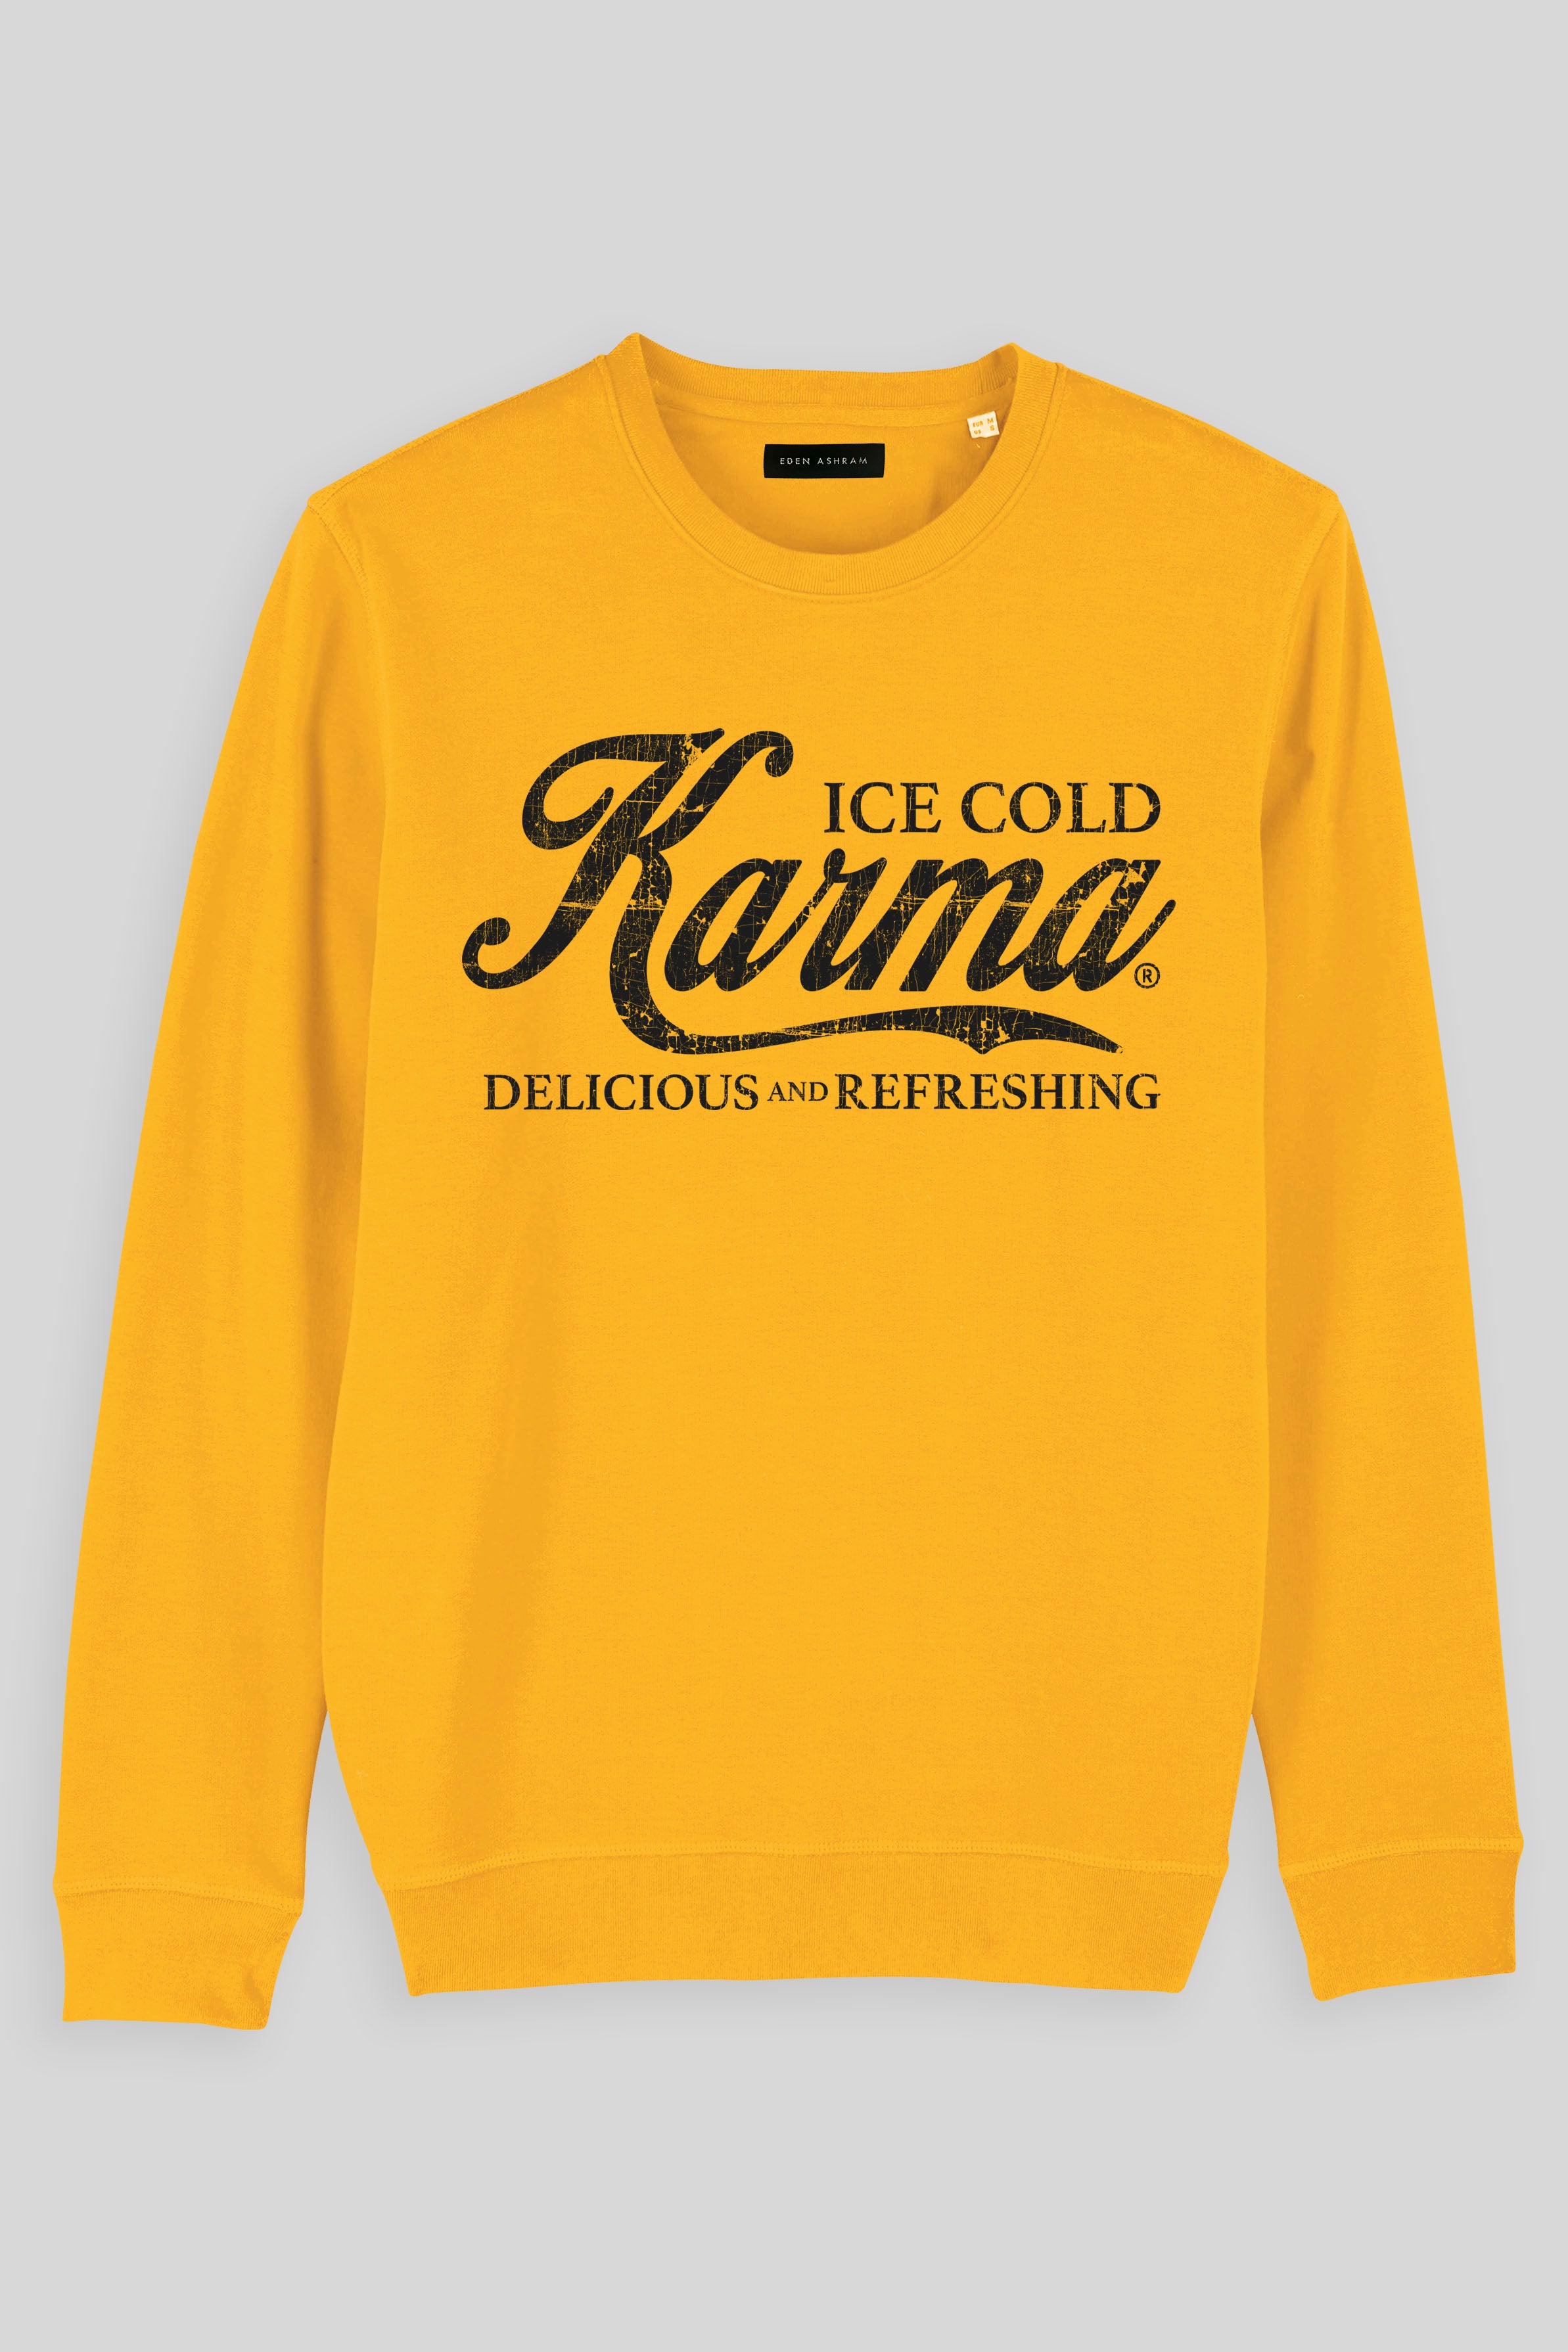 Eden Ashram Ice Cold Karma Premium Crew Neck Sweatshirt Spectra Yellow